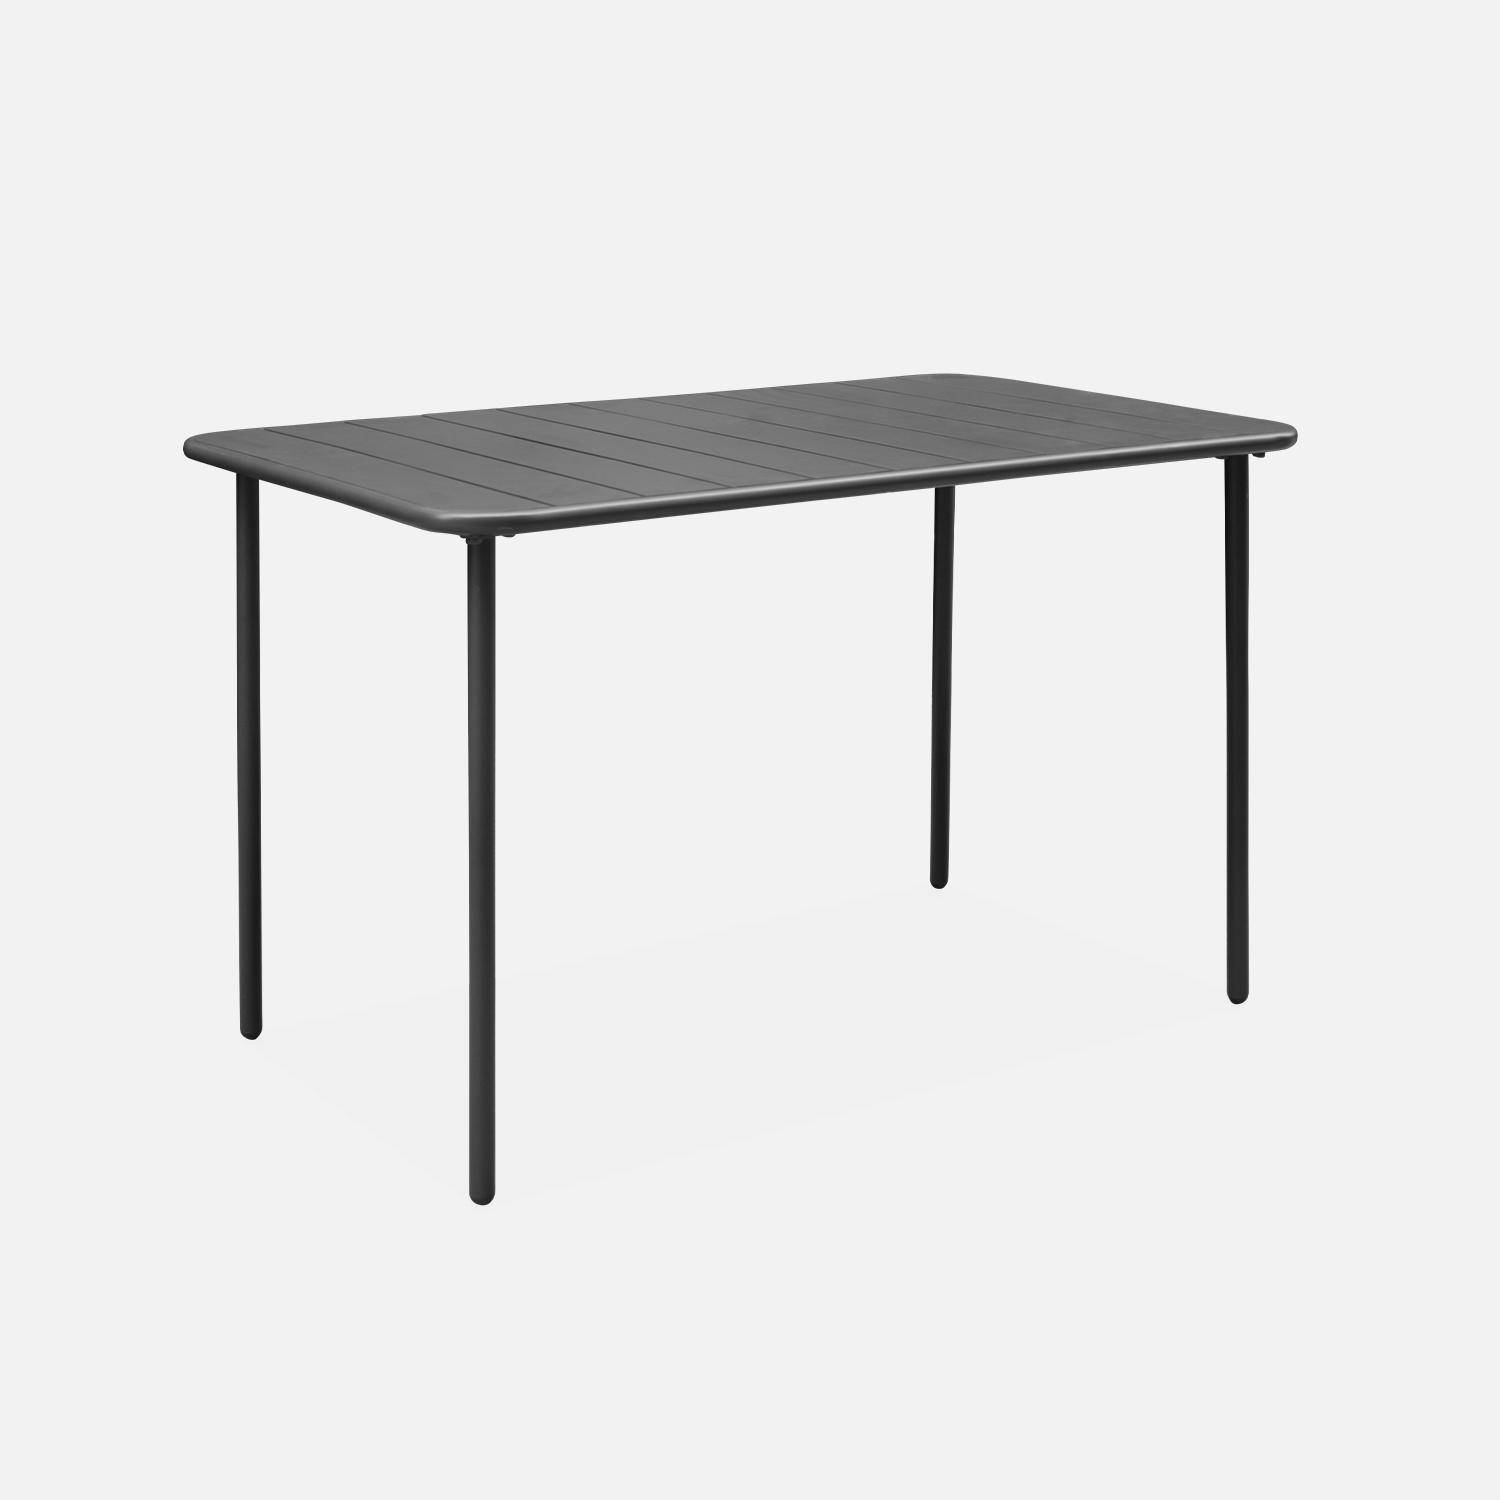 4-seater rectangular steel garden table, 120x70cm - Amelia - Anthracite,sweeek,Photo3